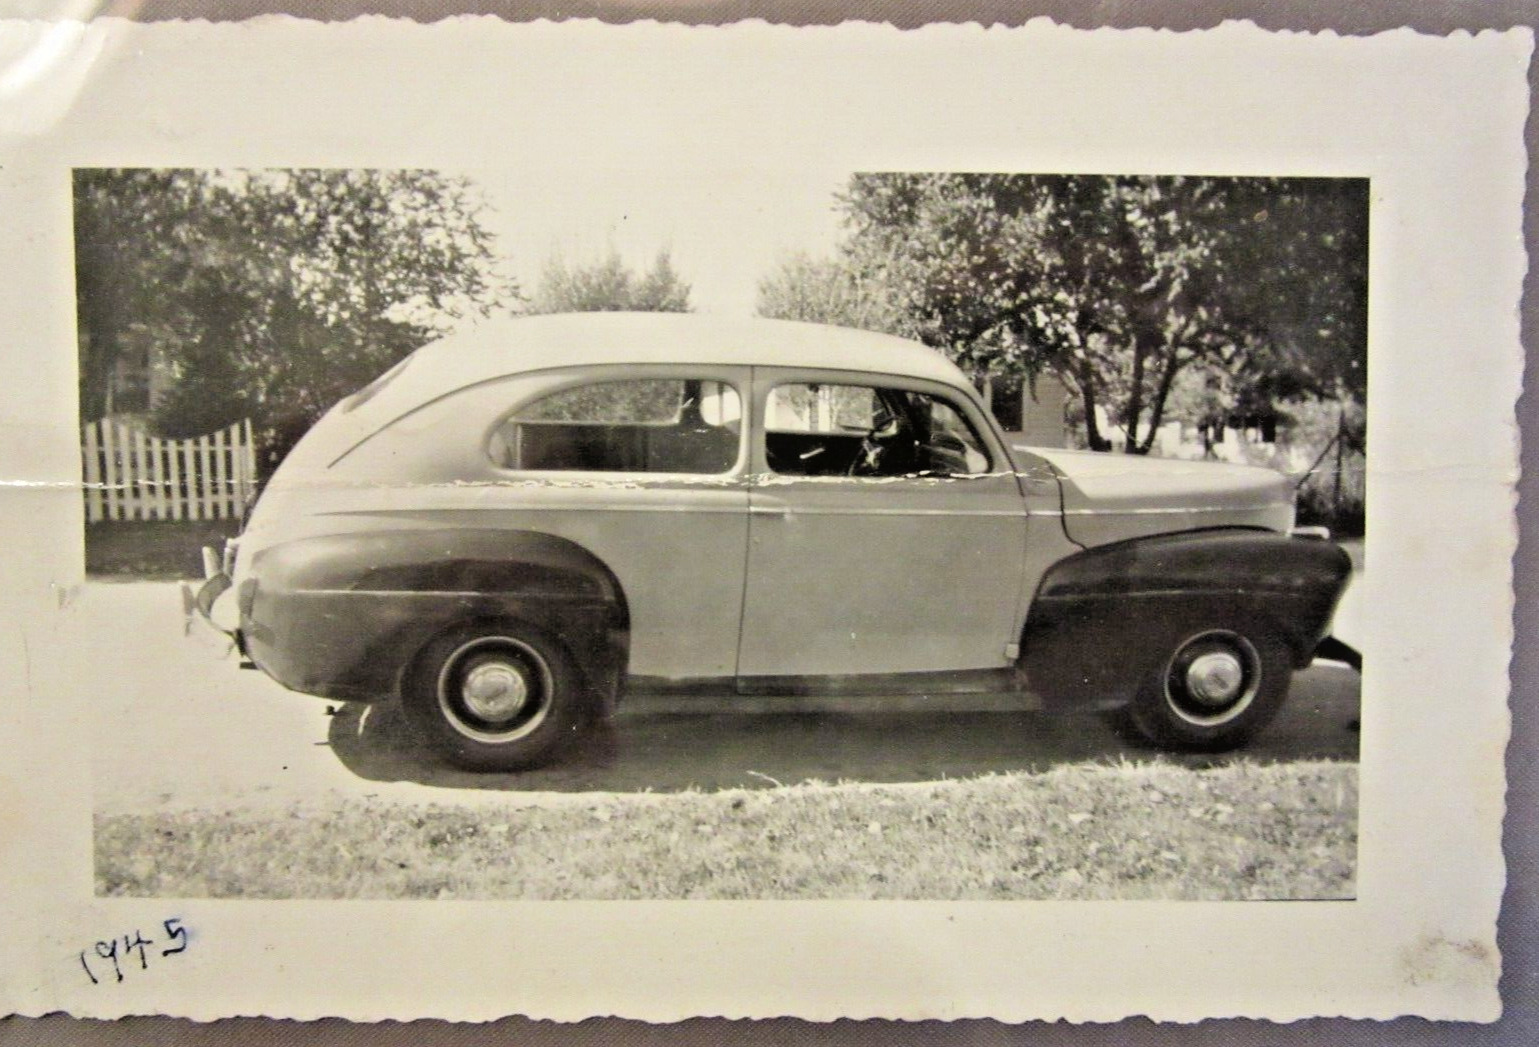 1941 FORD DeLUXE, Two Tone,  2-door Sedan. B&W photo, 5 1/4